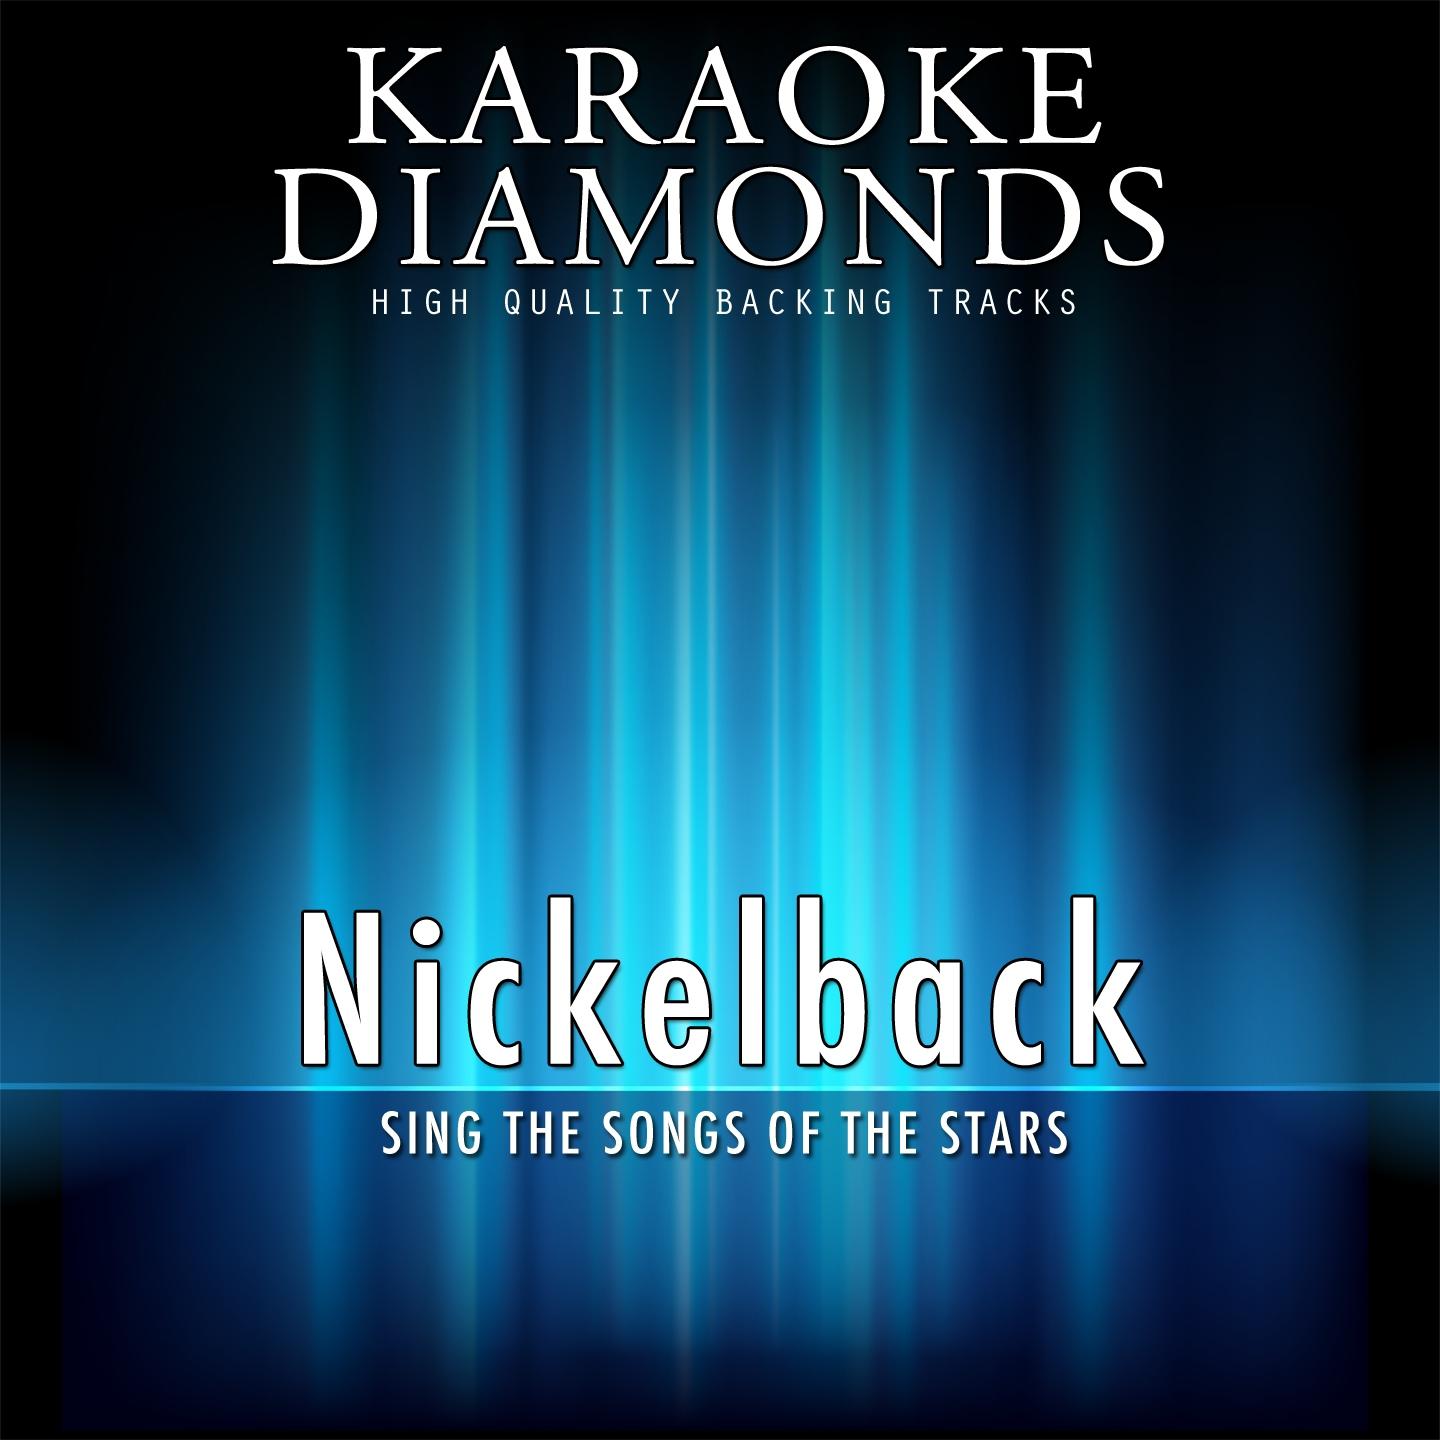 Amy Lee - Because of You (Karaoke Version) (Originally Performed By Nickelback)